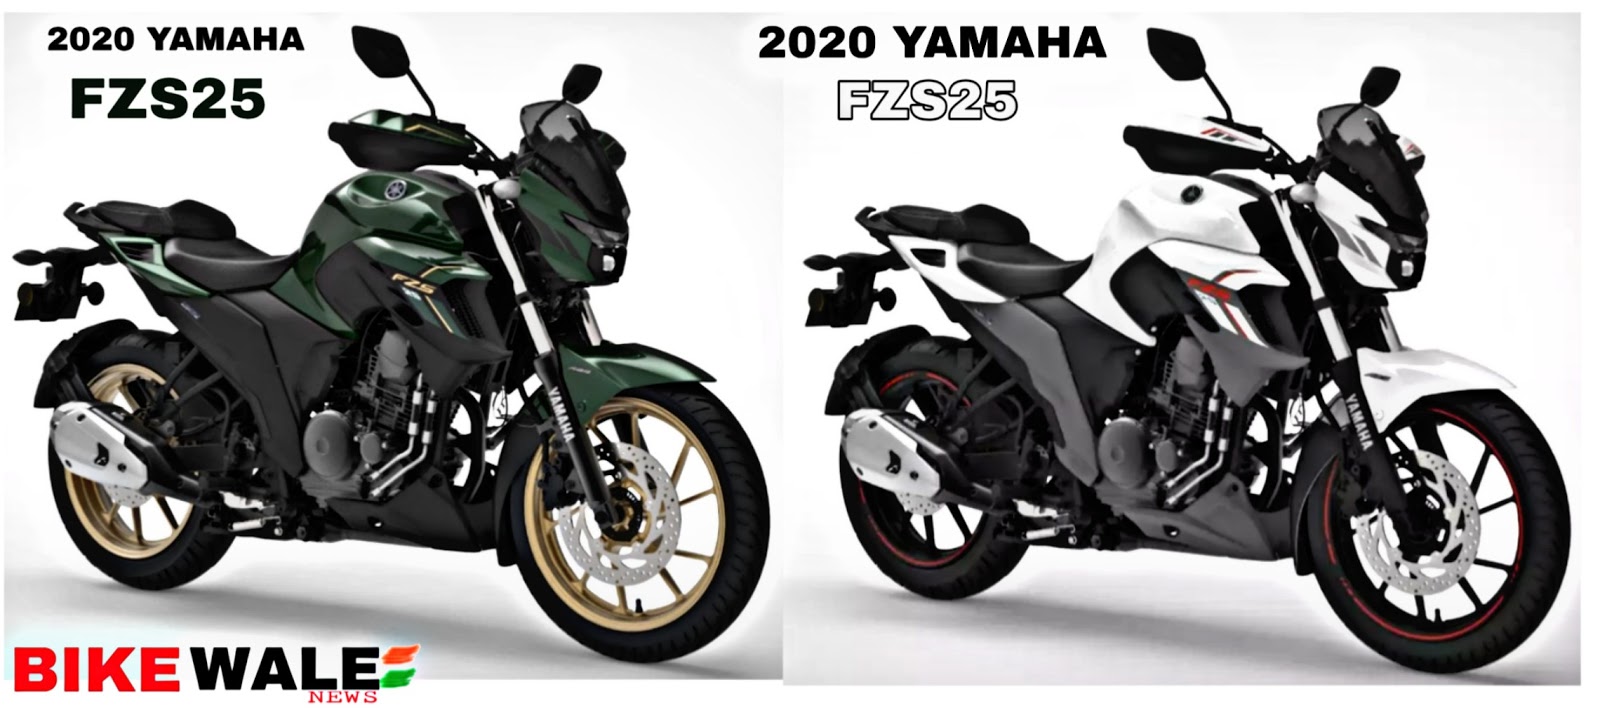 Yamaha Fz25 New Model 2020